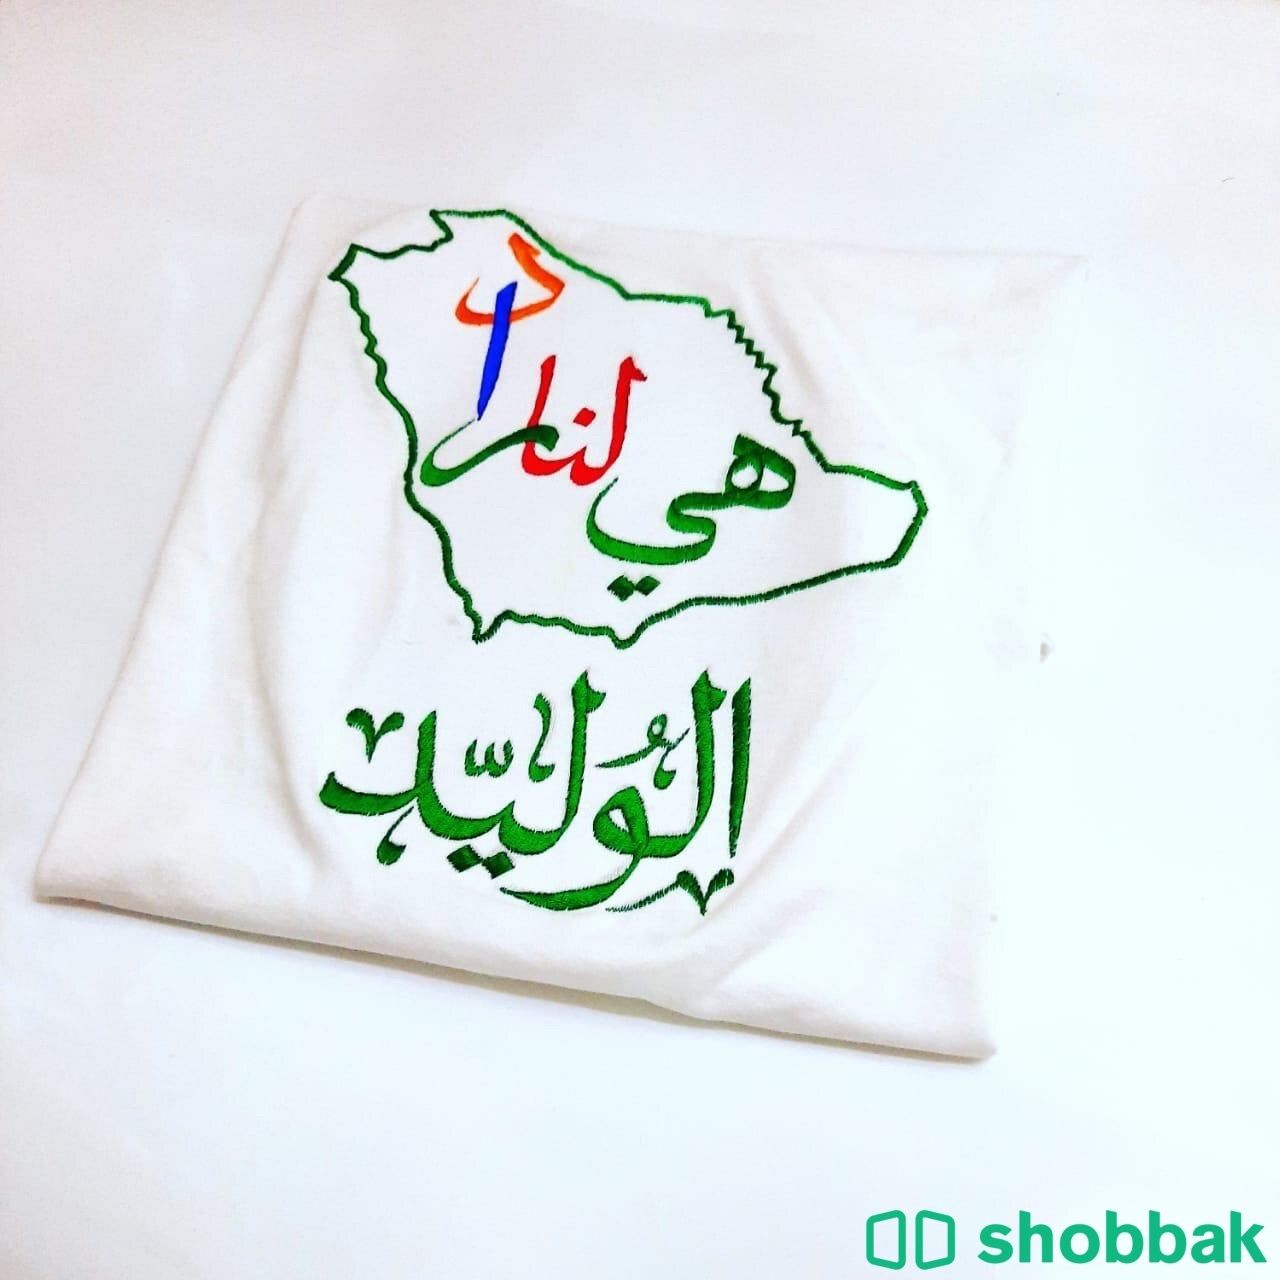 ملابس وطنيه Shobbak Saudi Arabia